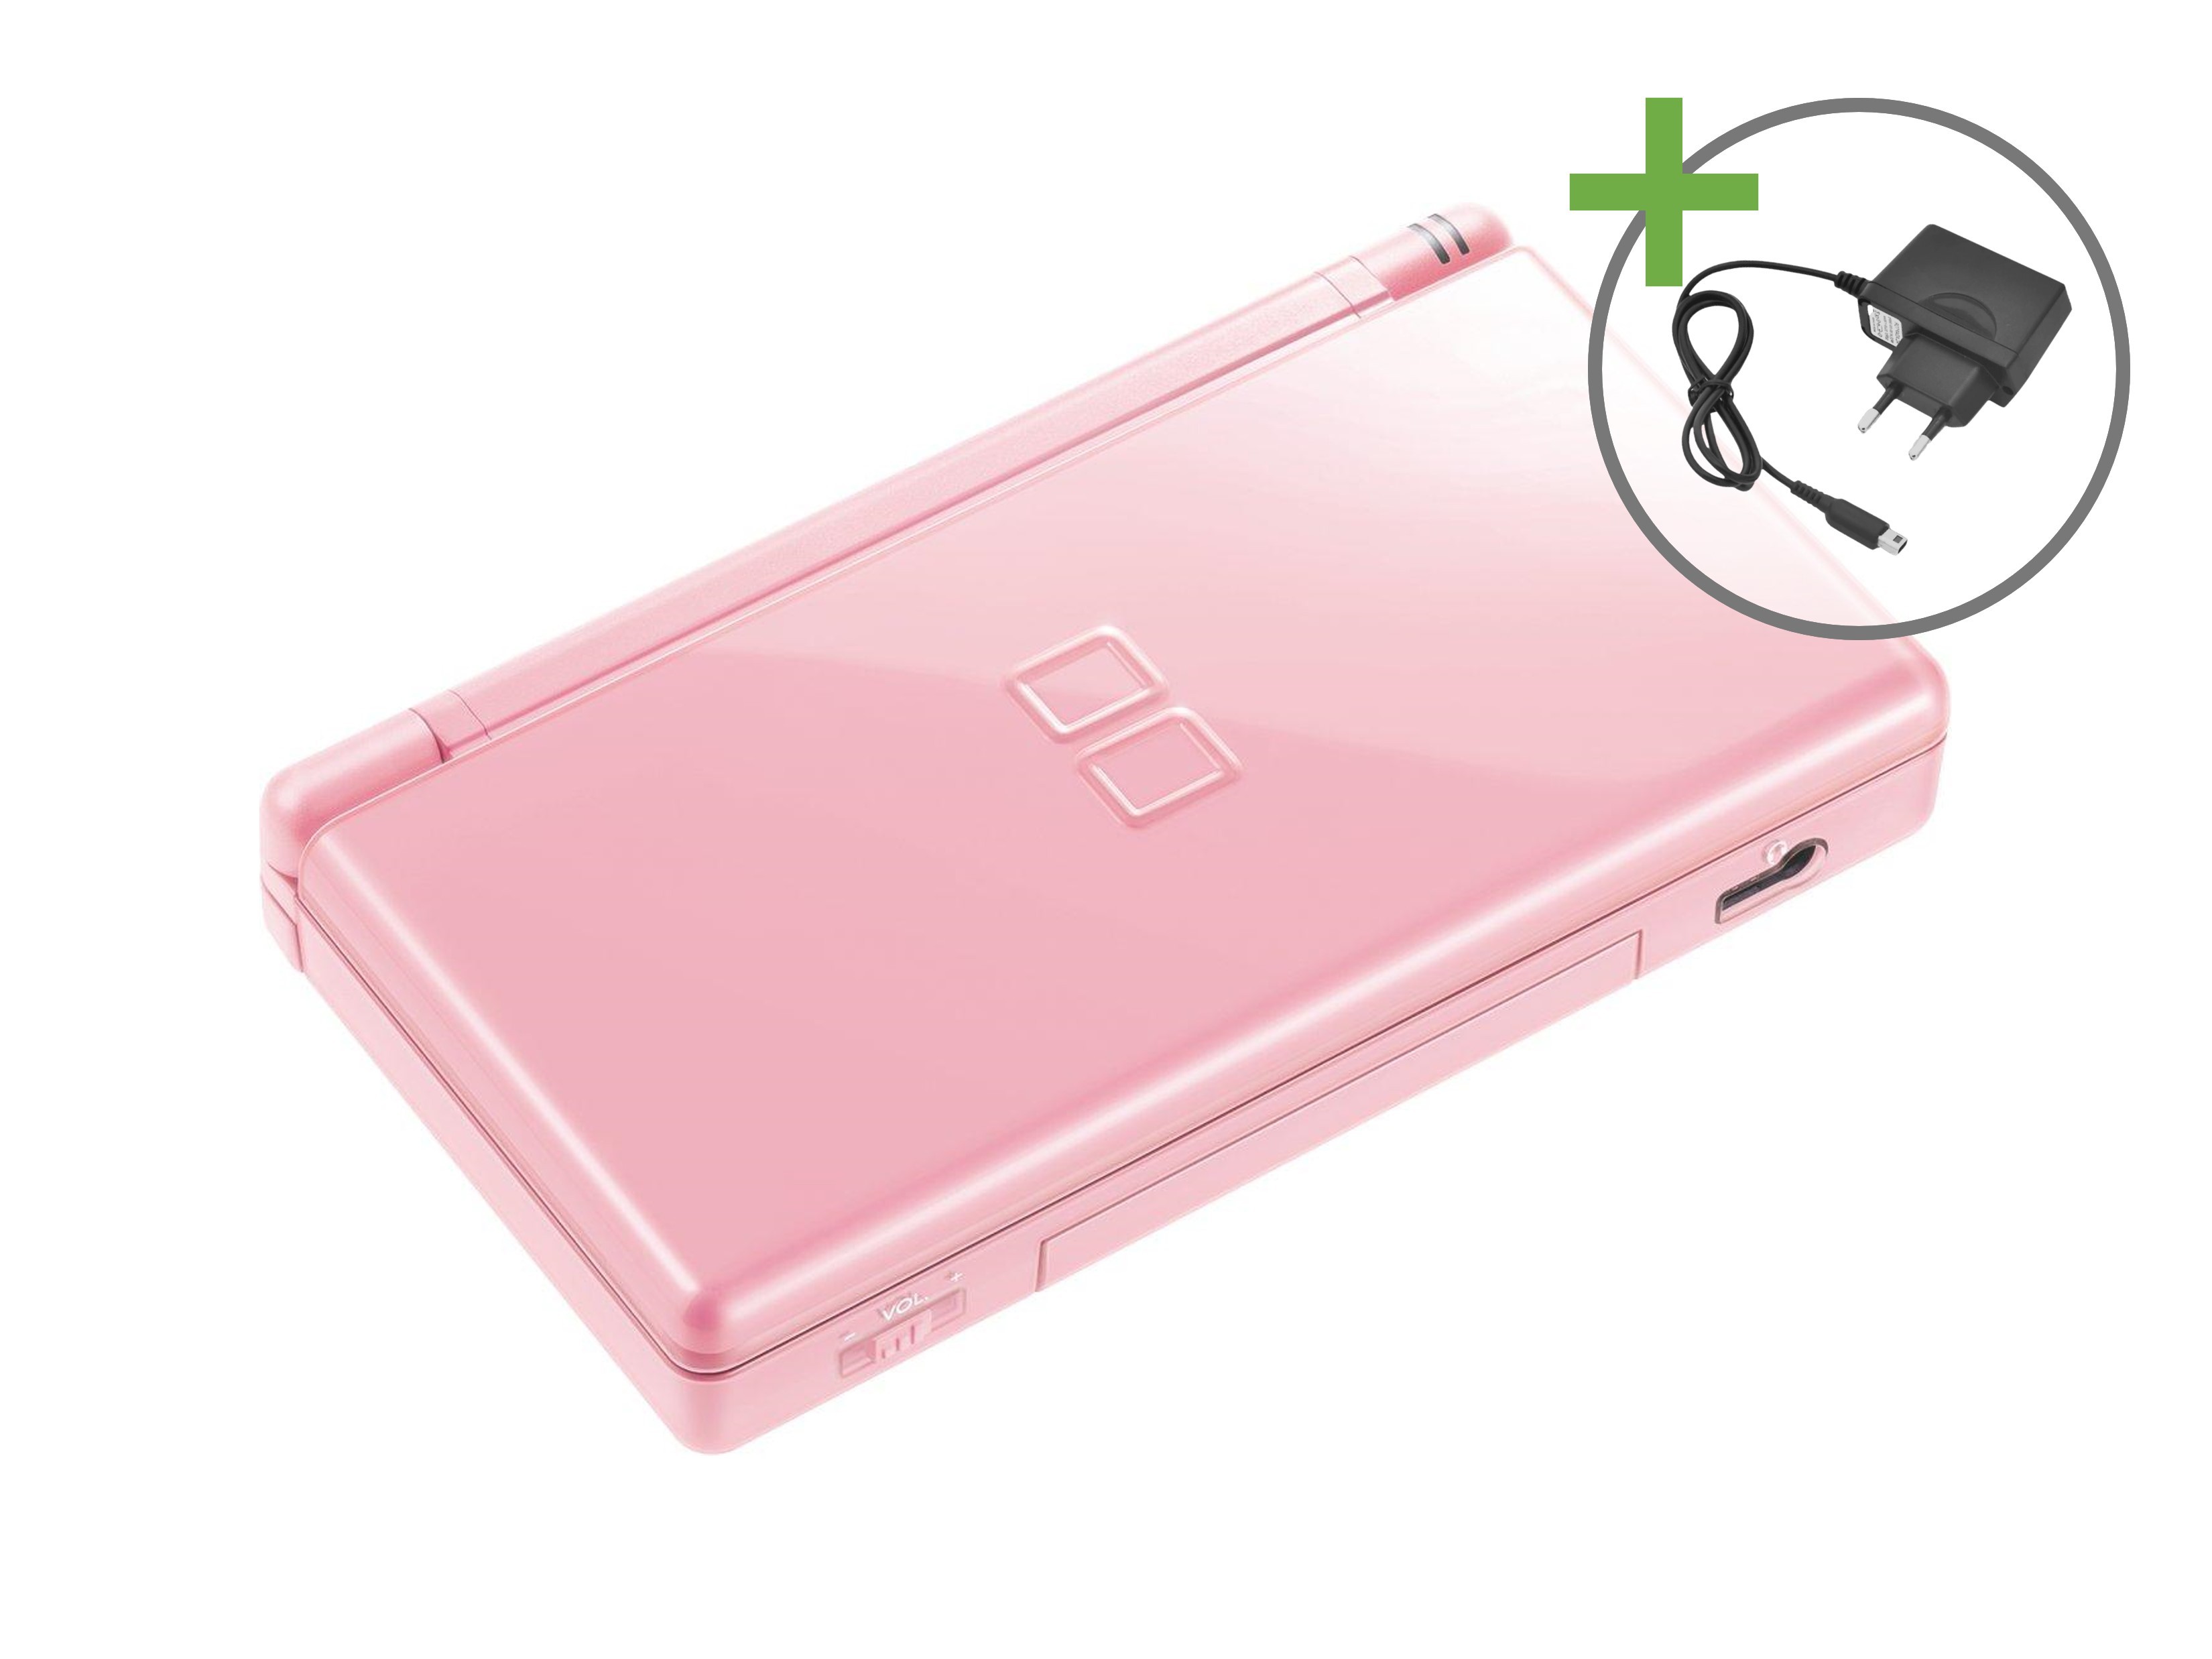 Nintendo DS Lite Pink [Complete] - Nintendo DS Hardware - 3